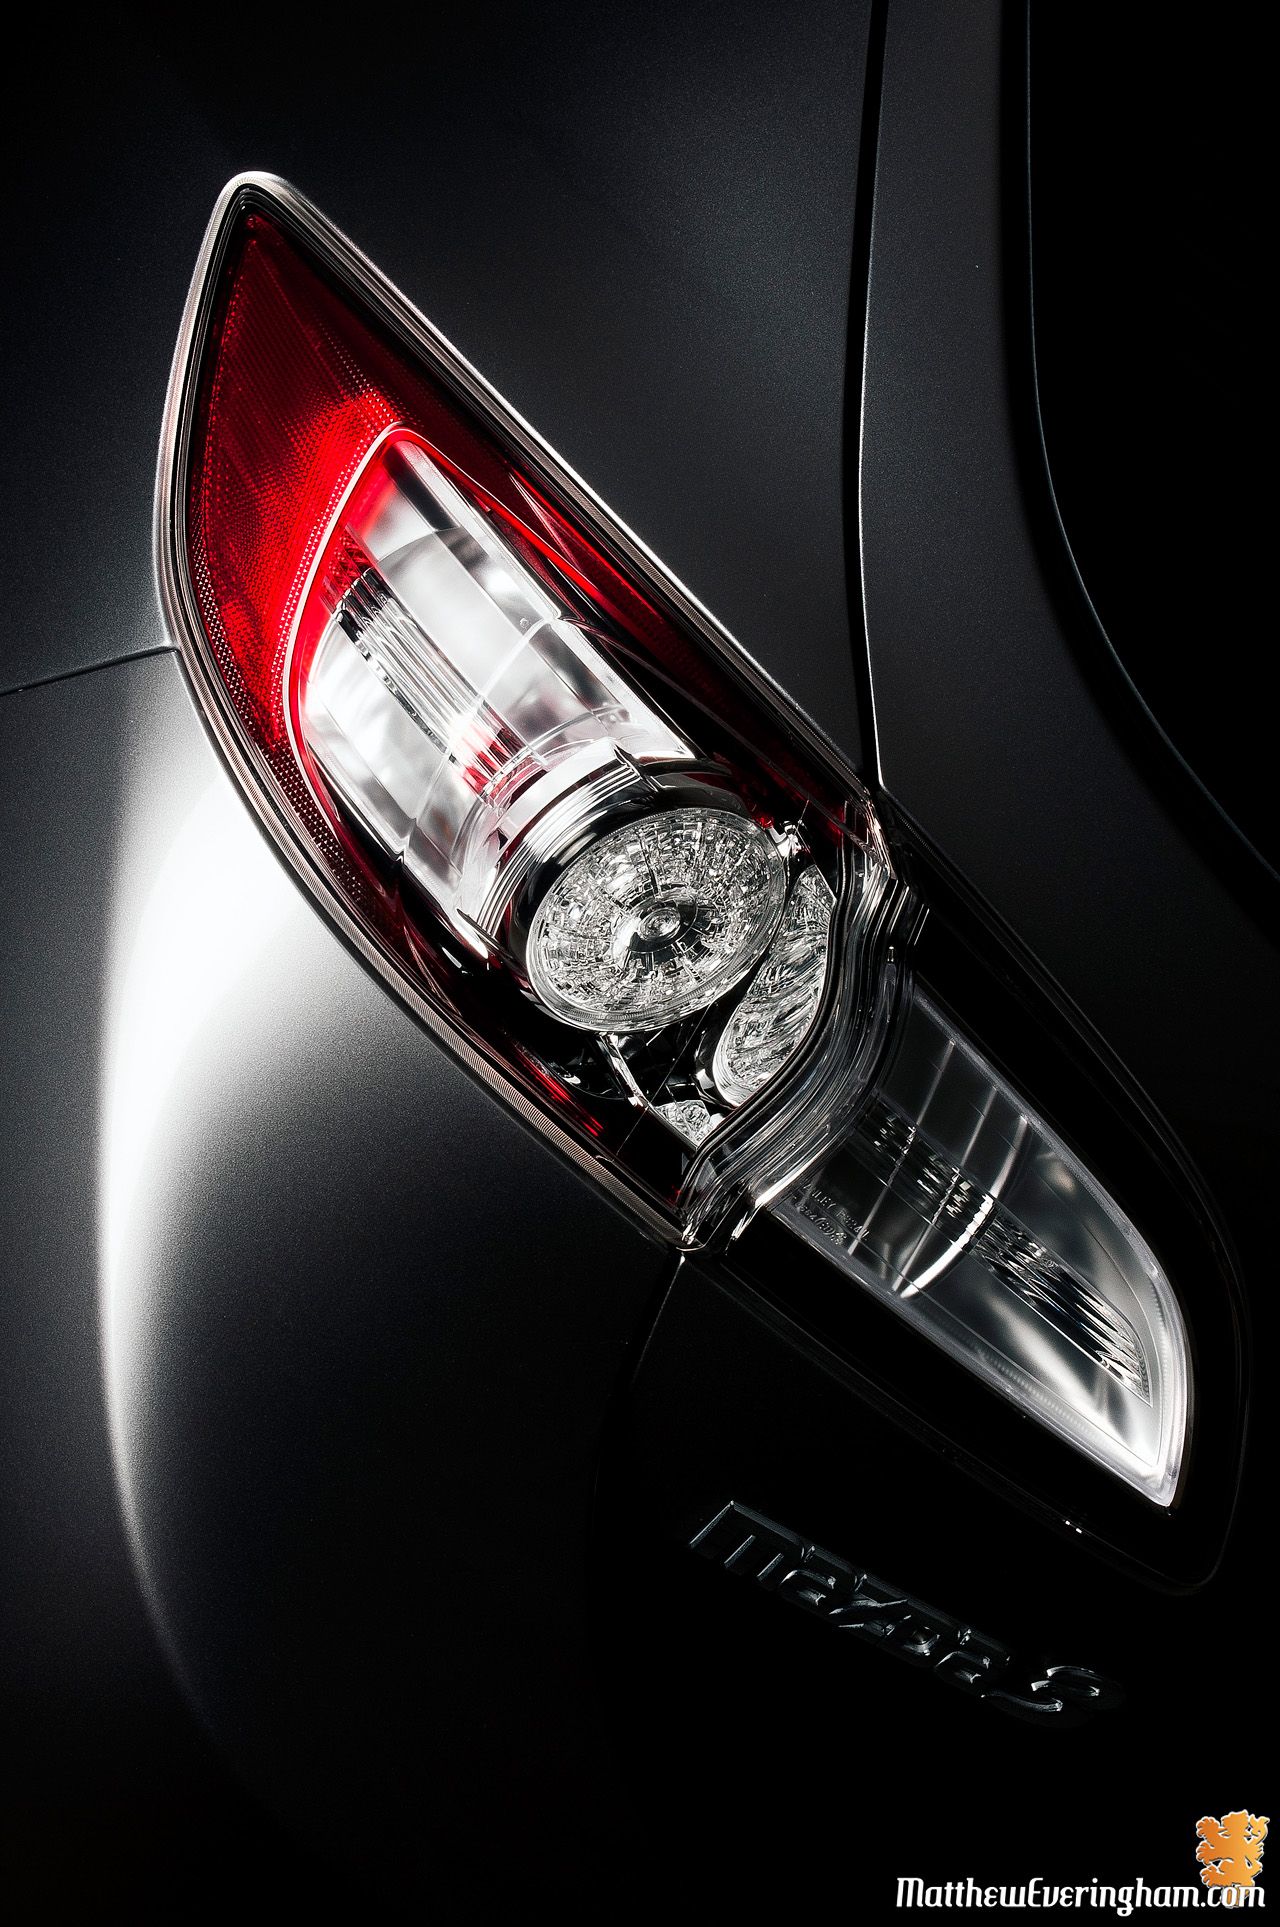 Liv's Mazda 3 SP25 | Flickr - Photo Sharing!